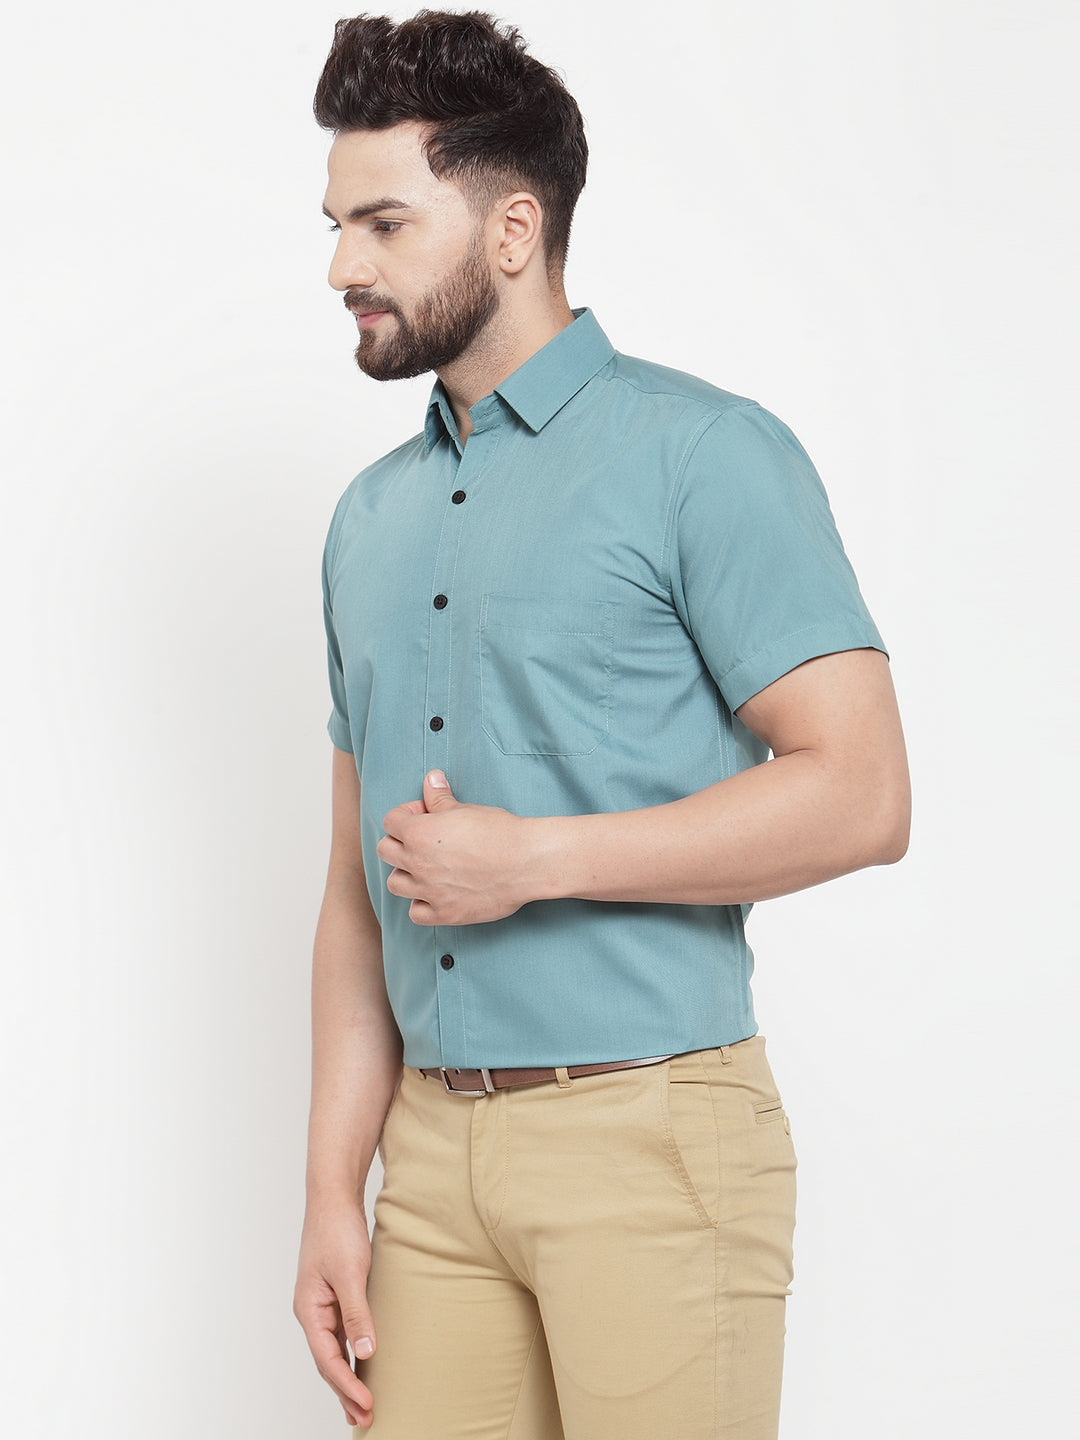 Men's Green Cotton Half Sleeves Solid Formal Shirts ( SF 754Aqua ) - Jainish